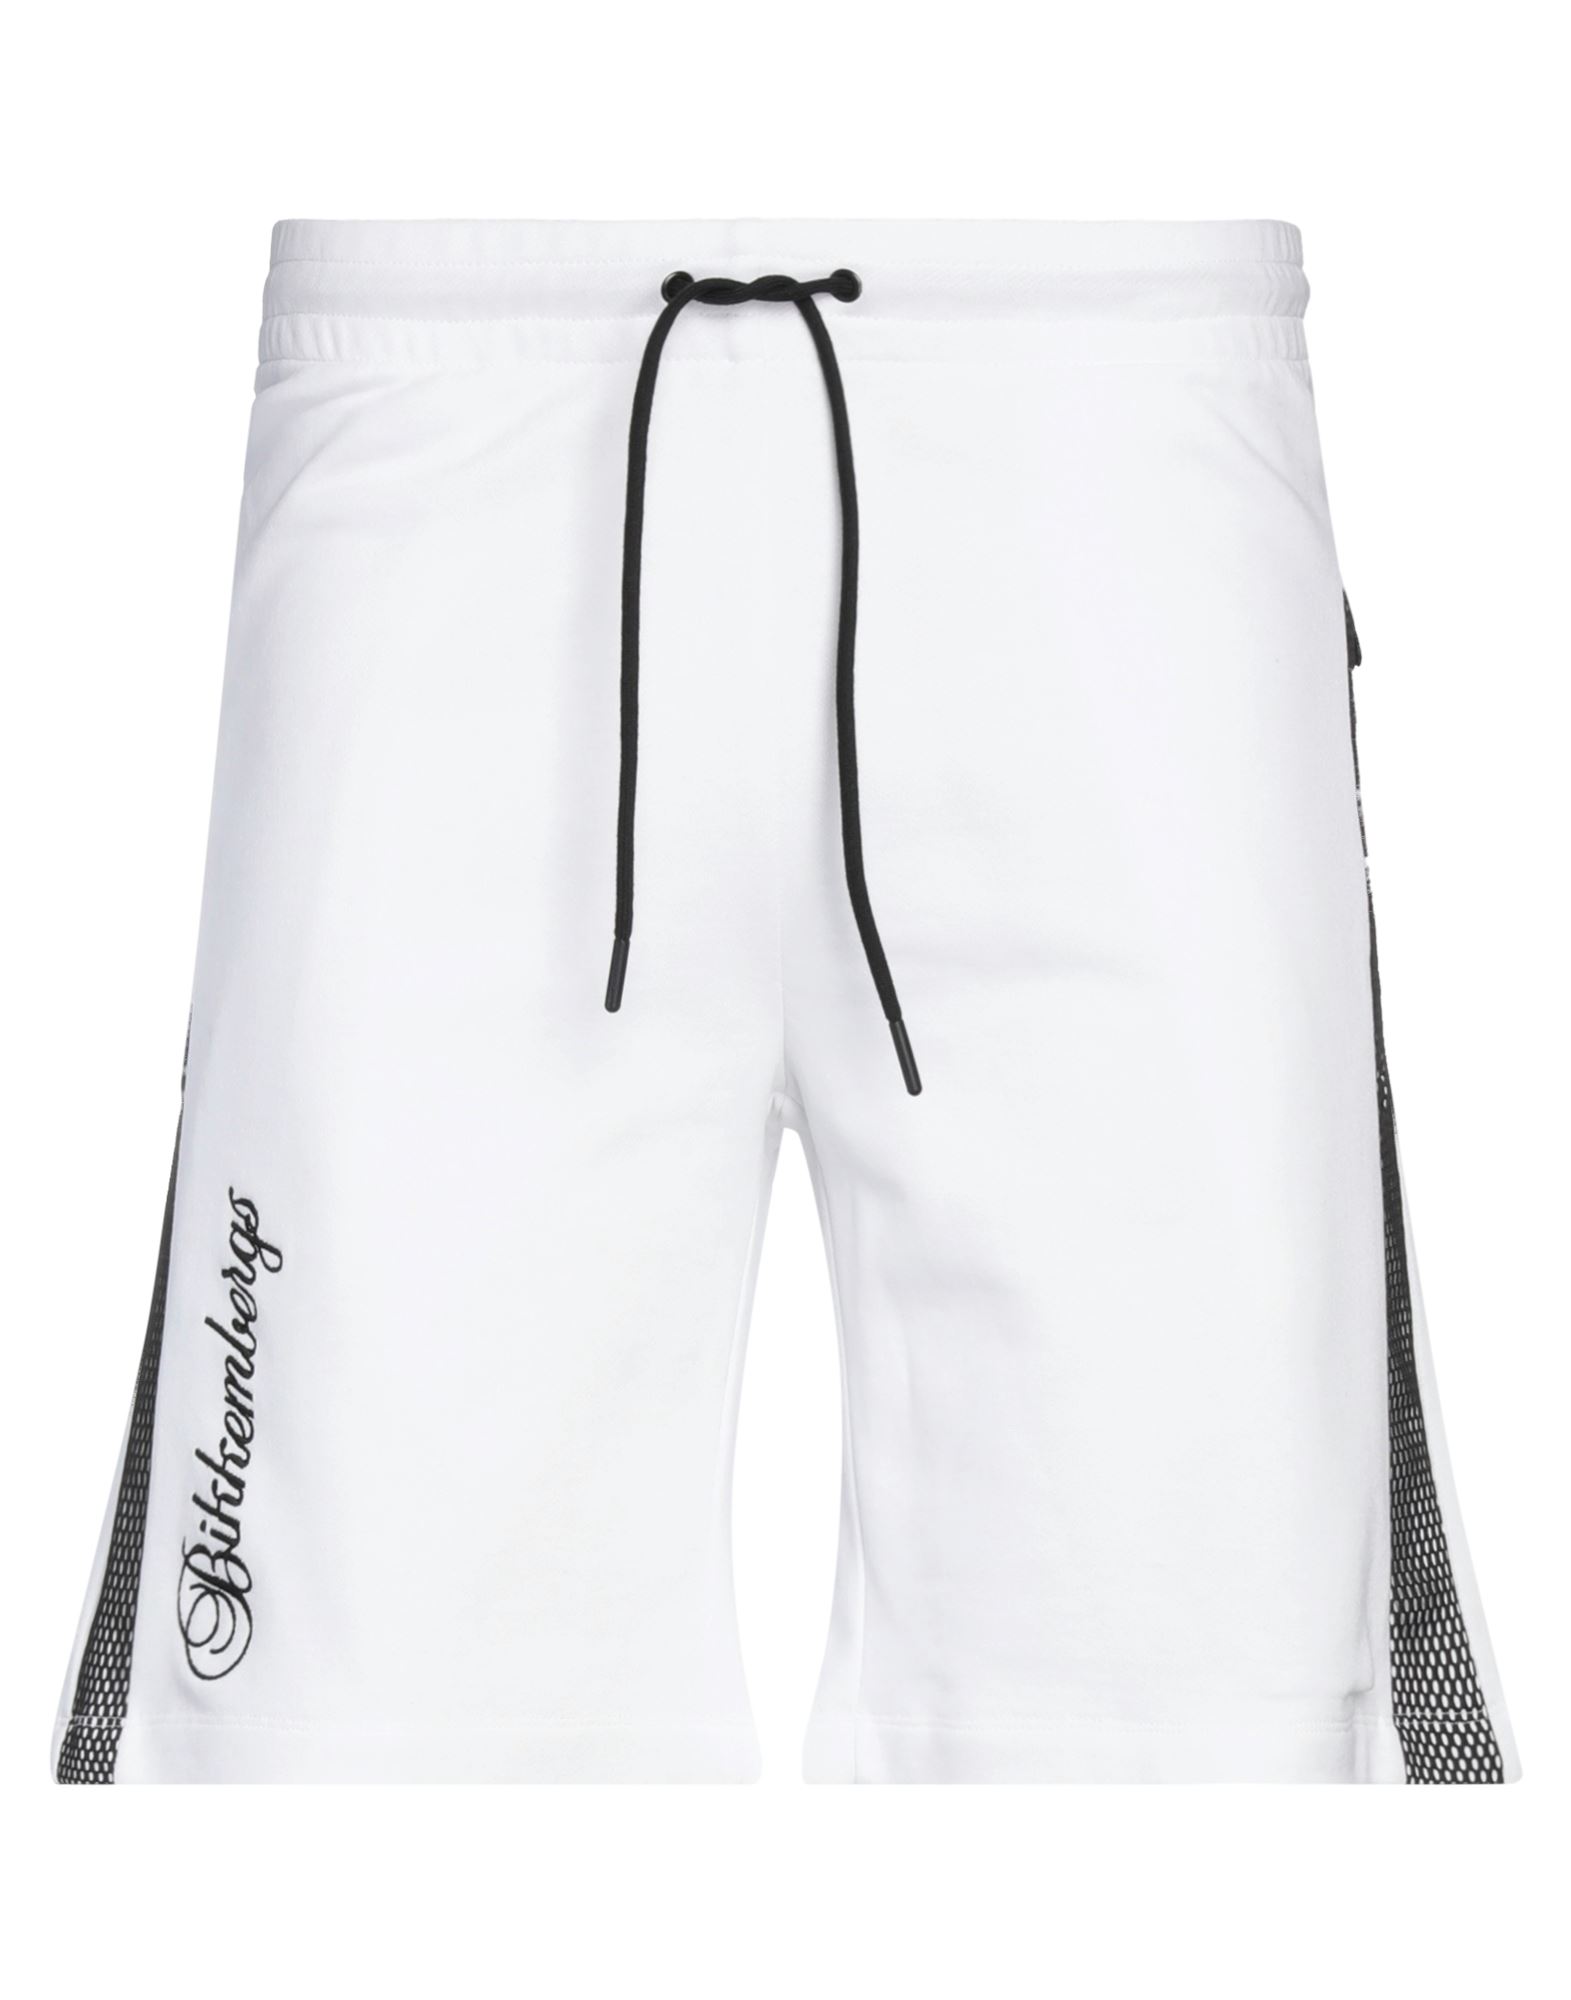 BIKKEMBERGS Shorts & Bermudashorts Herren Weiß von BIKKEMBERGS